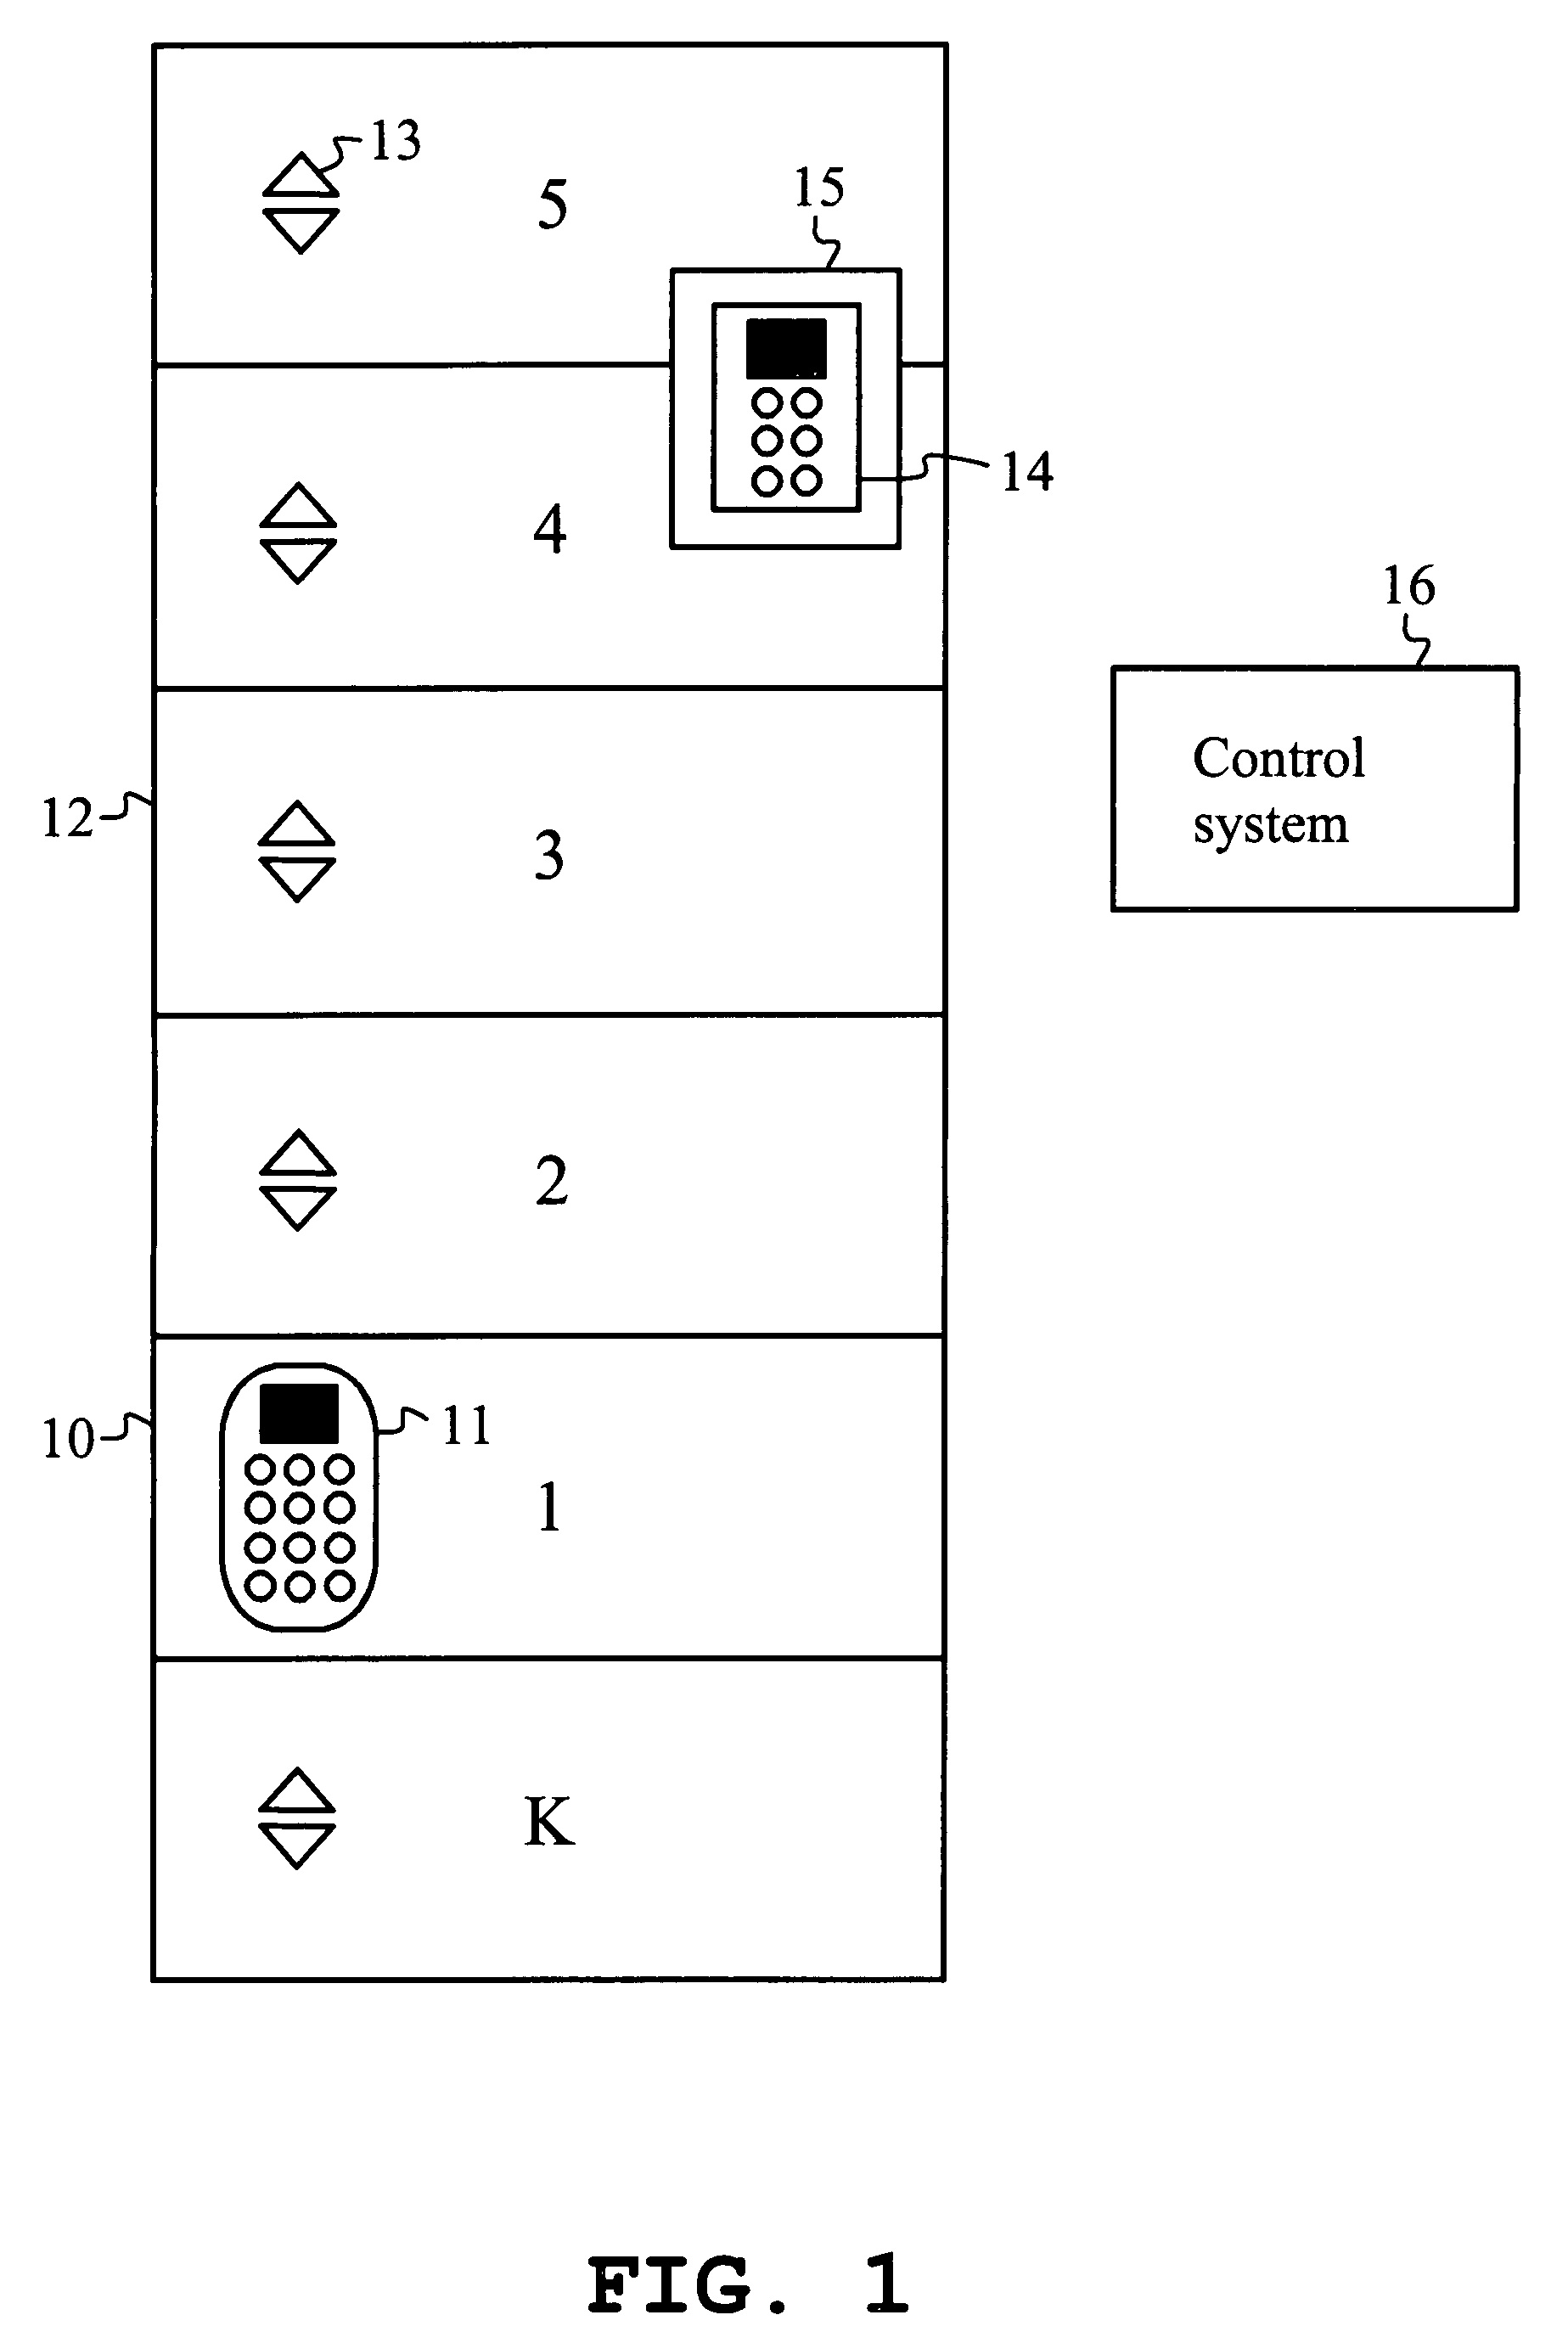 Elevator control system